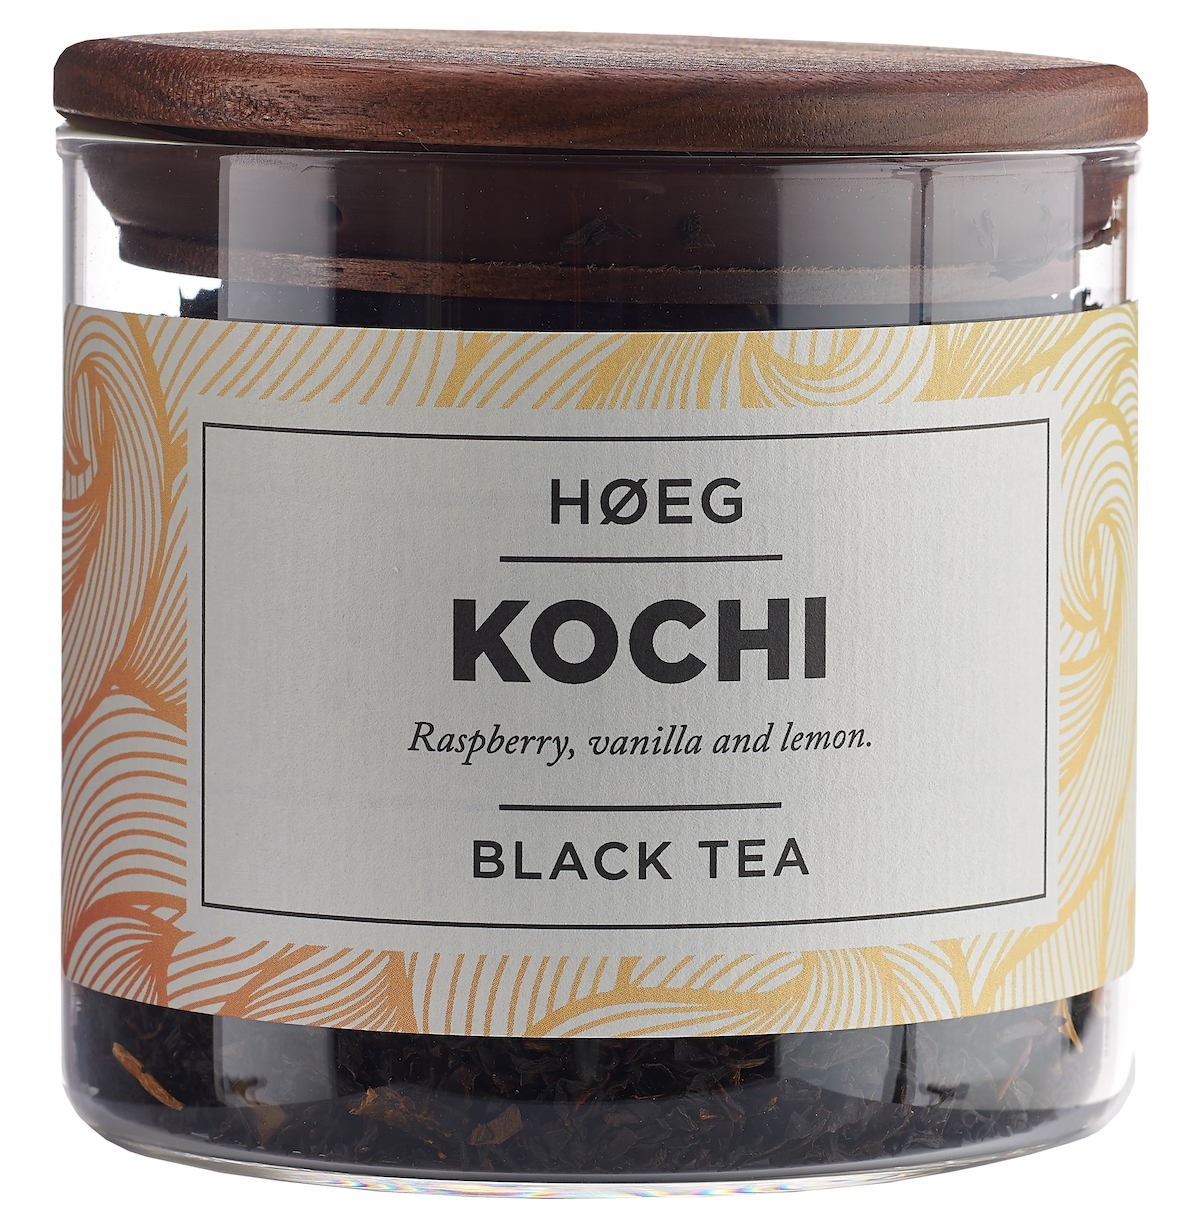 Hoeg Tea Kochi In Box